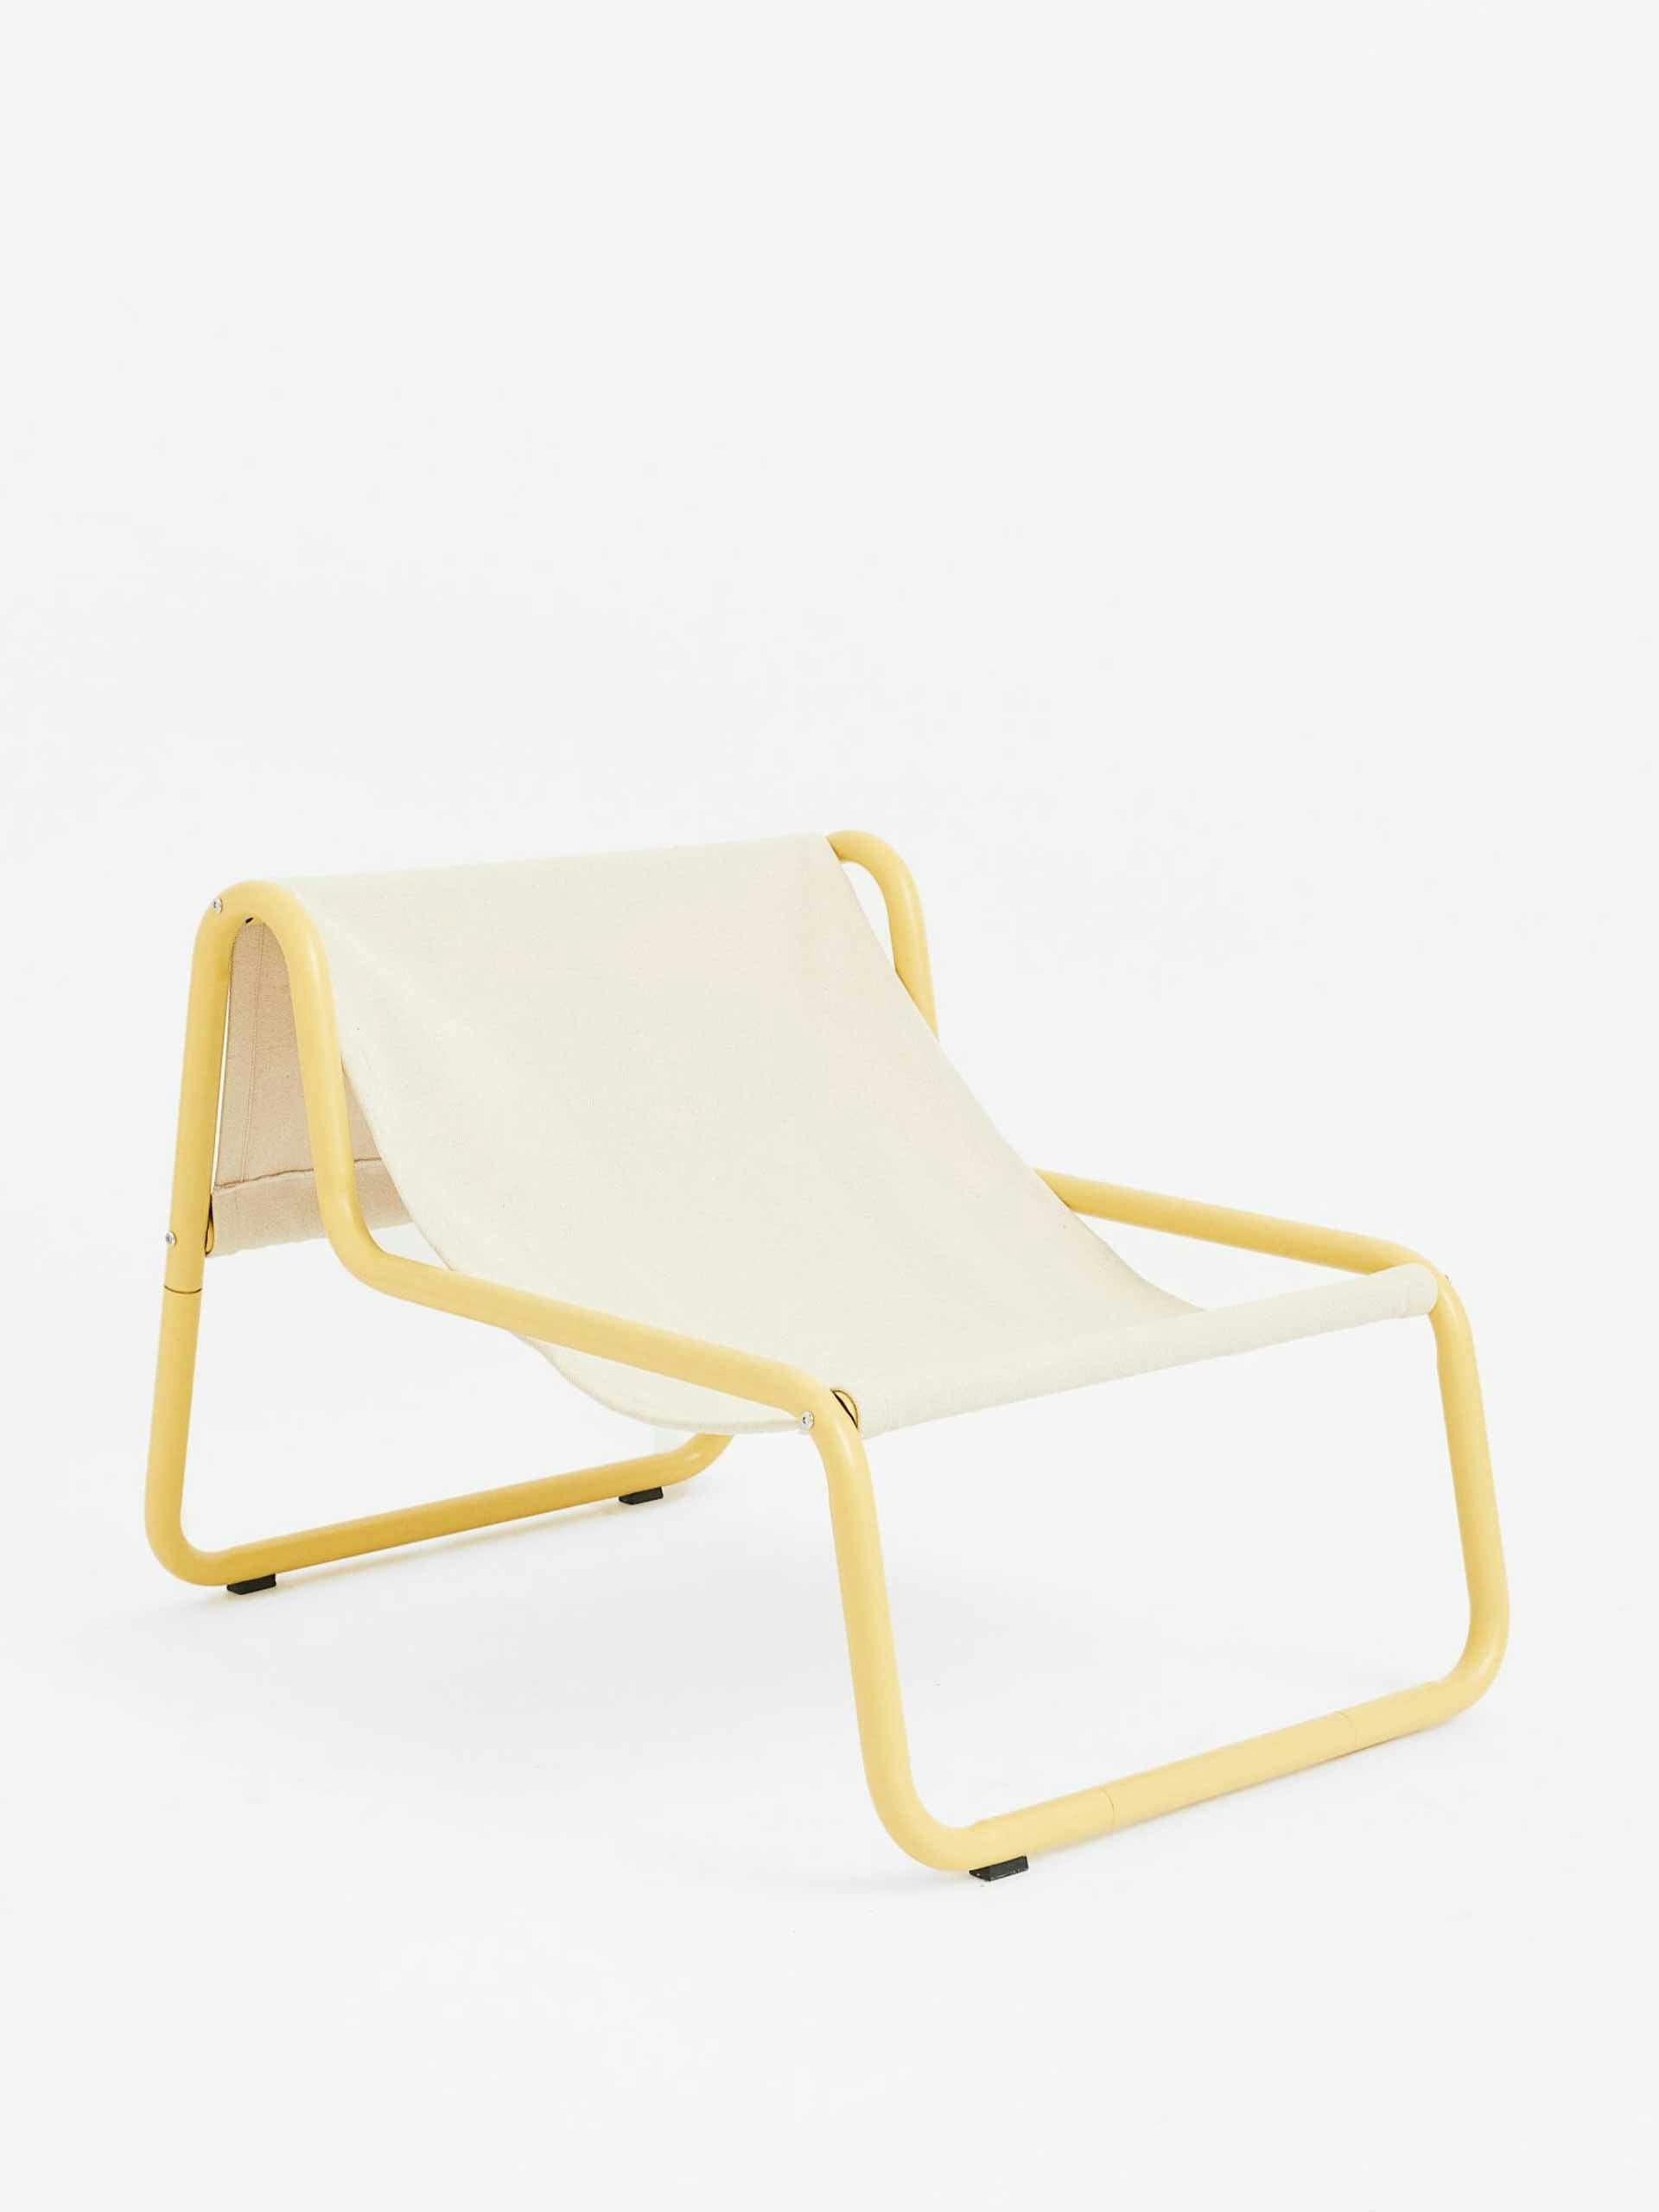 Yellow metal lounge chair